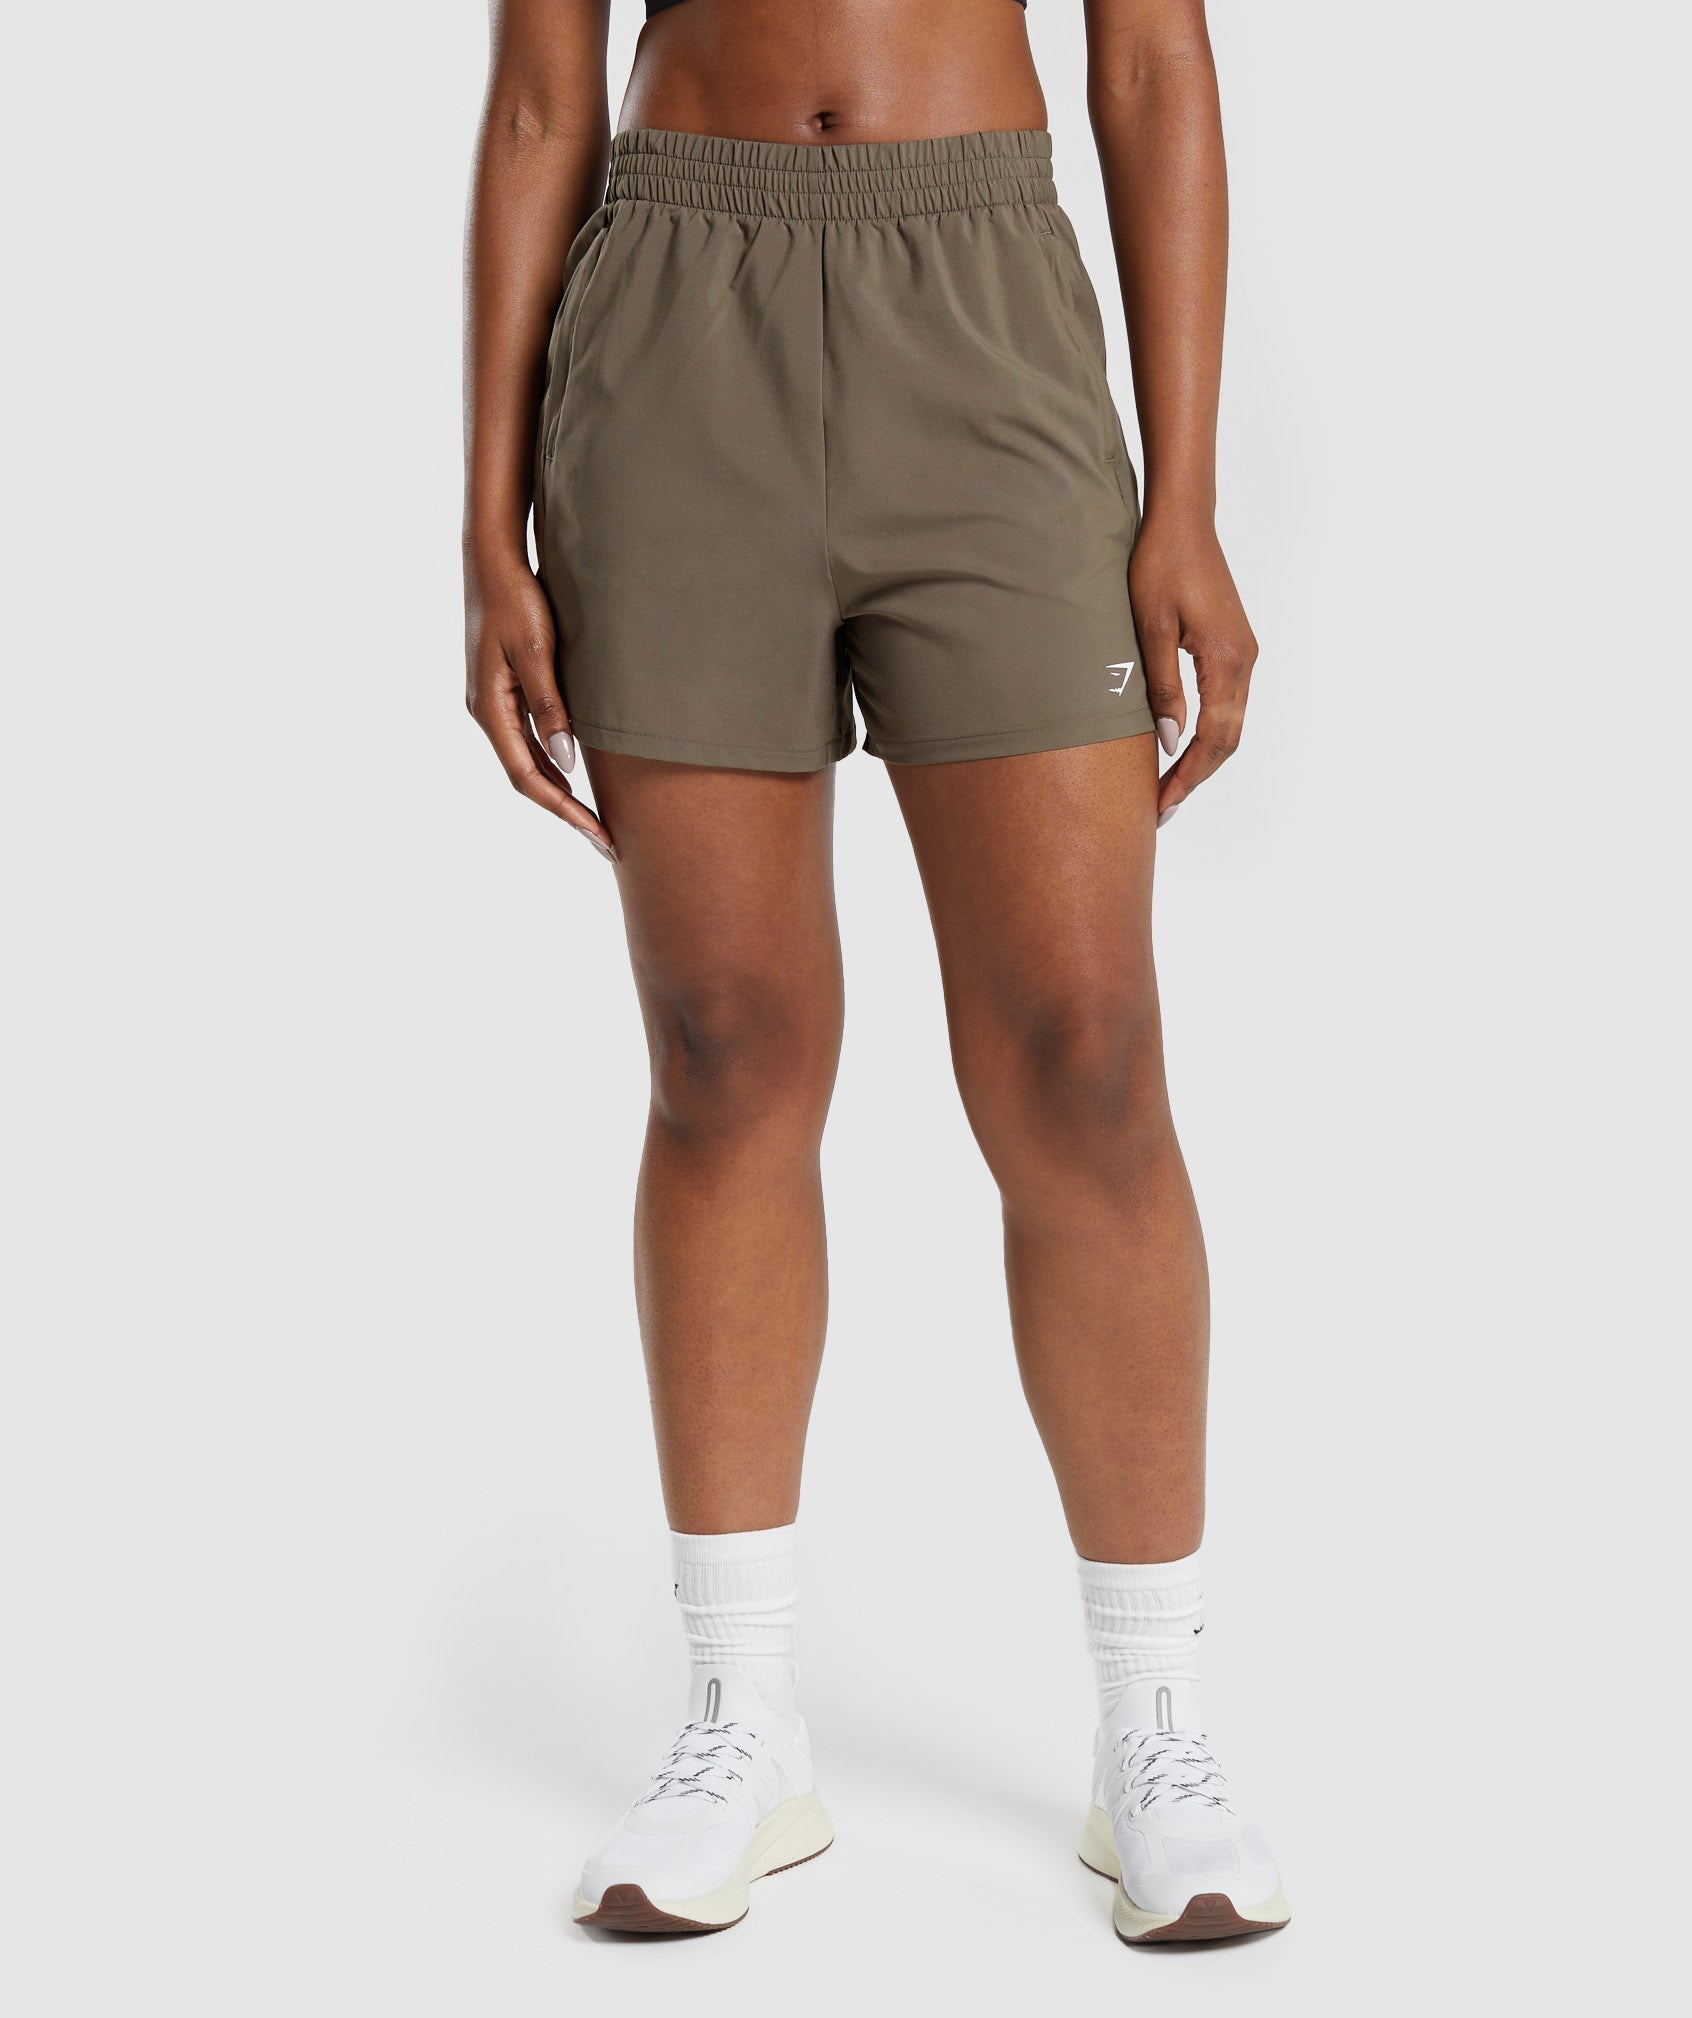 Gymshark Woven Pocket Shorts - Camo Brown